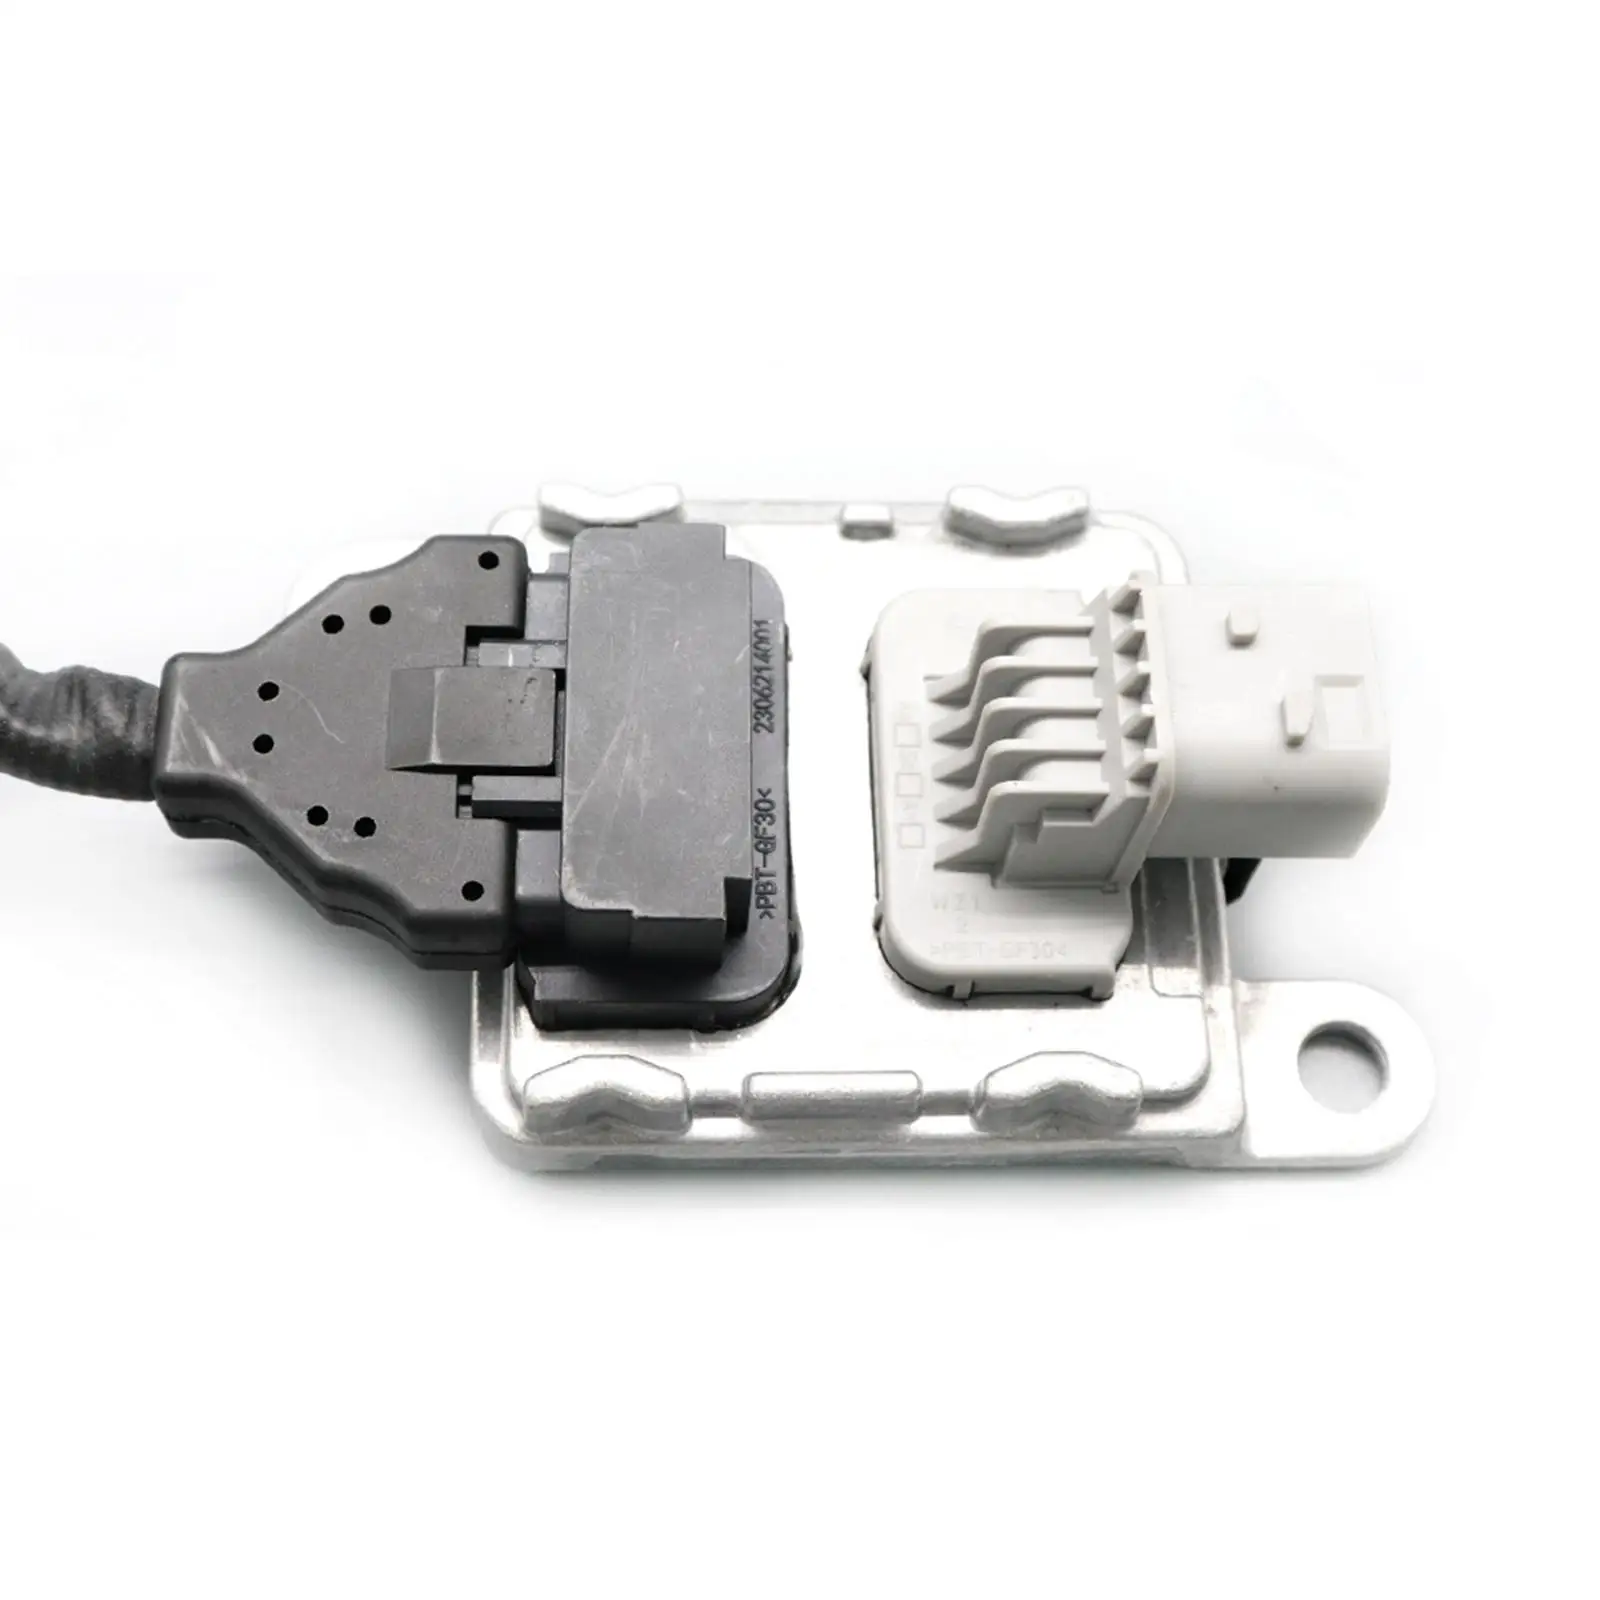 Car Nitrogen Oxygen Sensor Replaces Car Part 12V Fit for Benz ACC Replace Parts A0101532328/5WK97339A